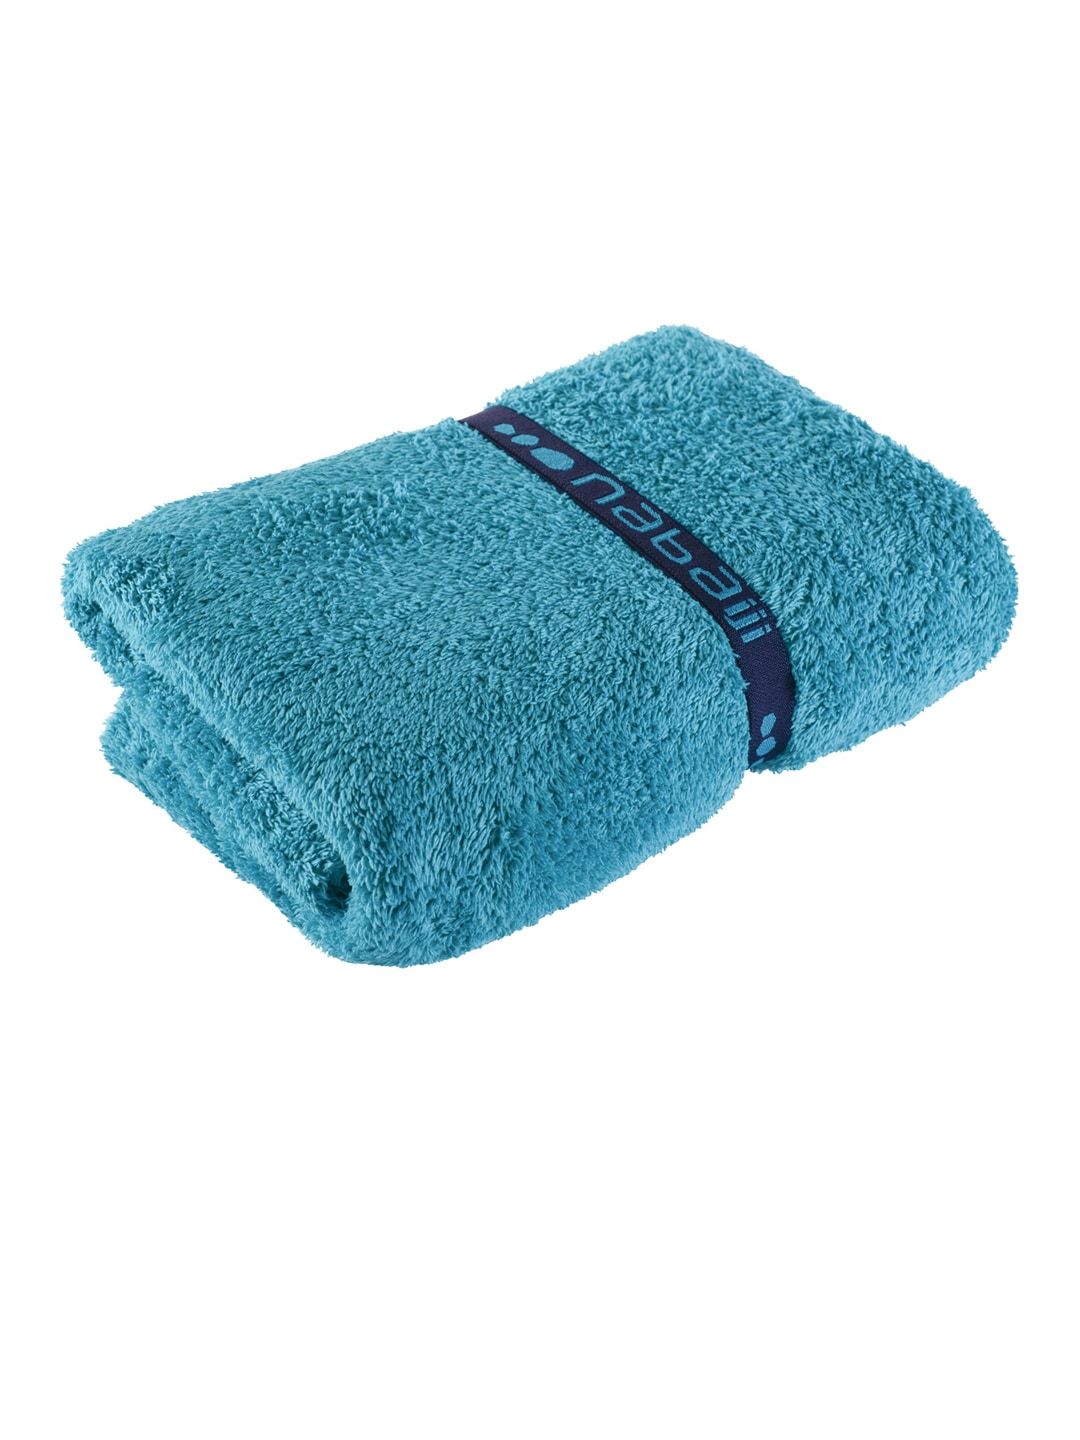 Nabaiji By Decathlon Microfiber Soft Towel Price in India